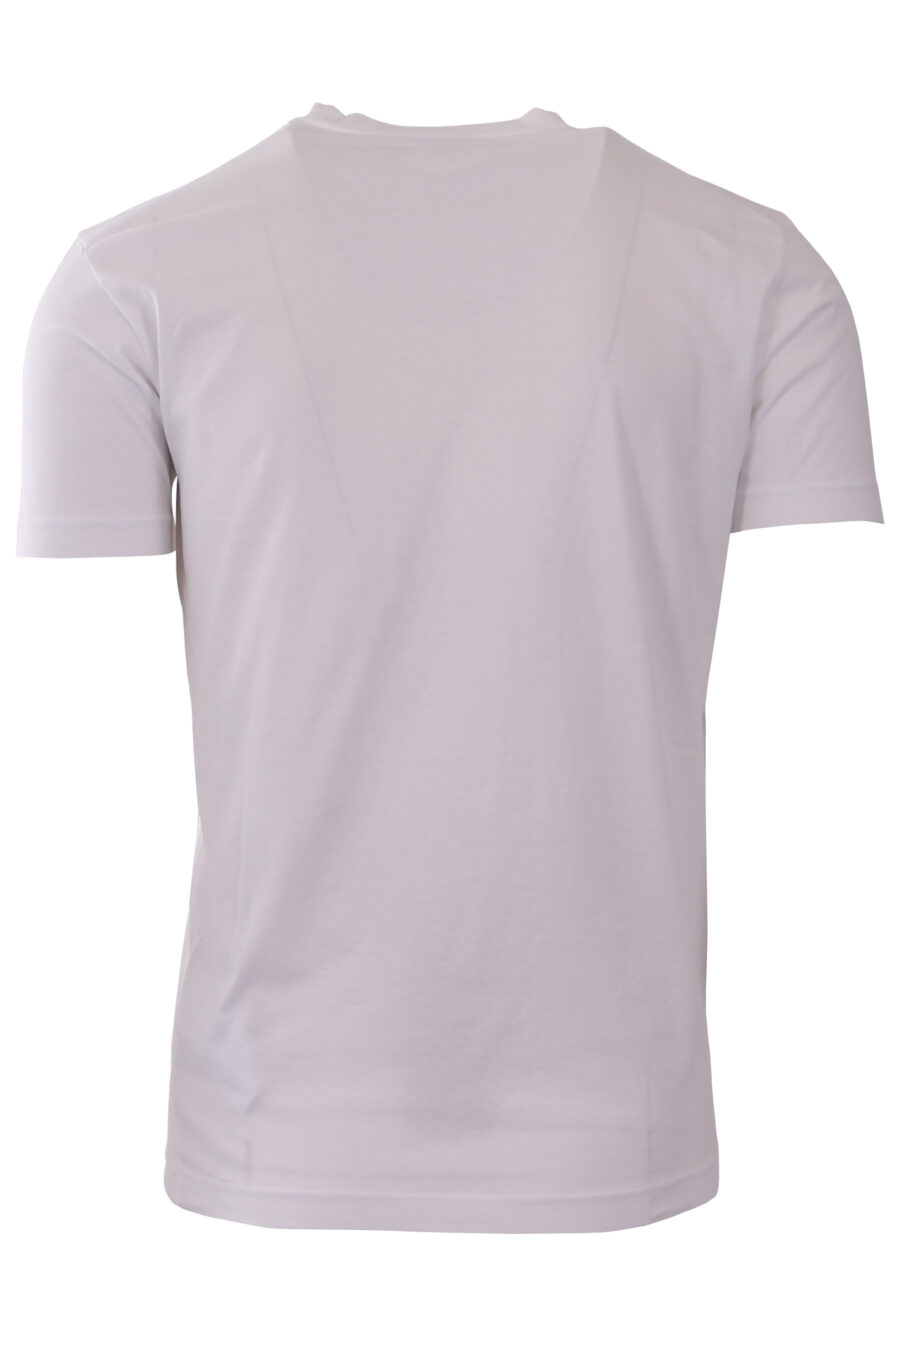 Weißes T-Shirt mit Maxilogo "milano italy" - IMG 1839